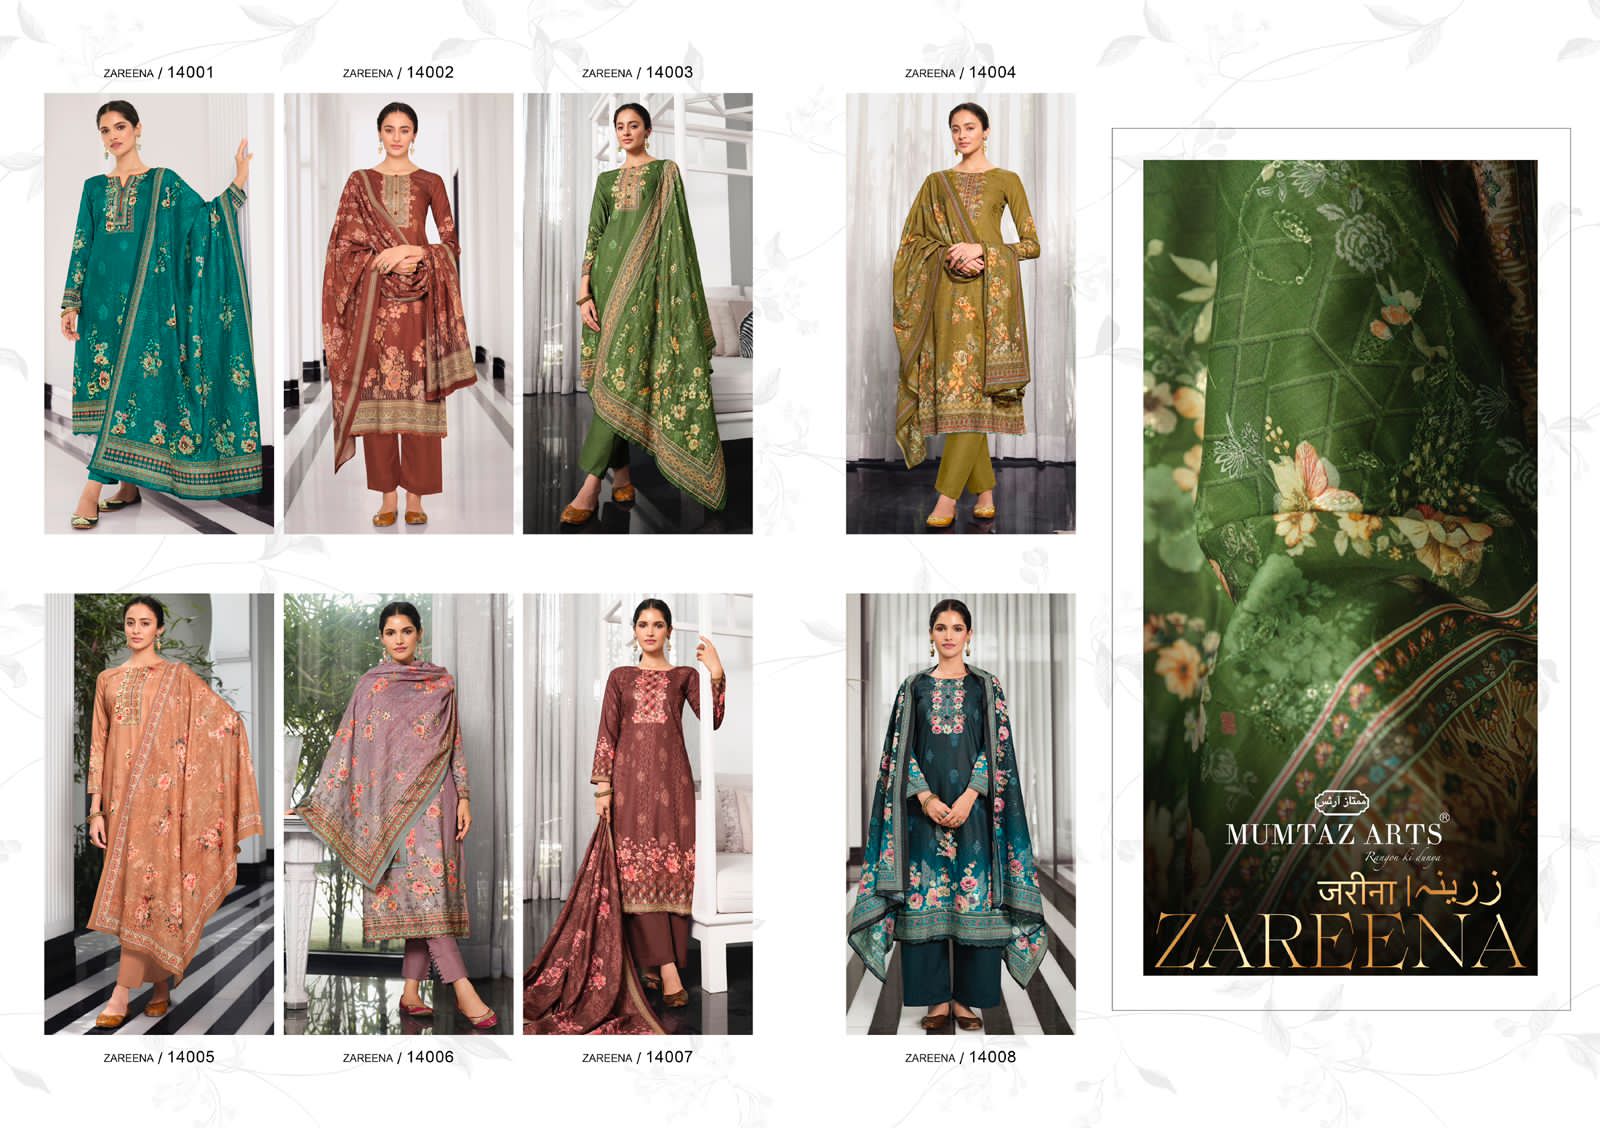 Mumtaz Zareena collection 10